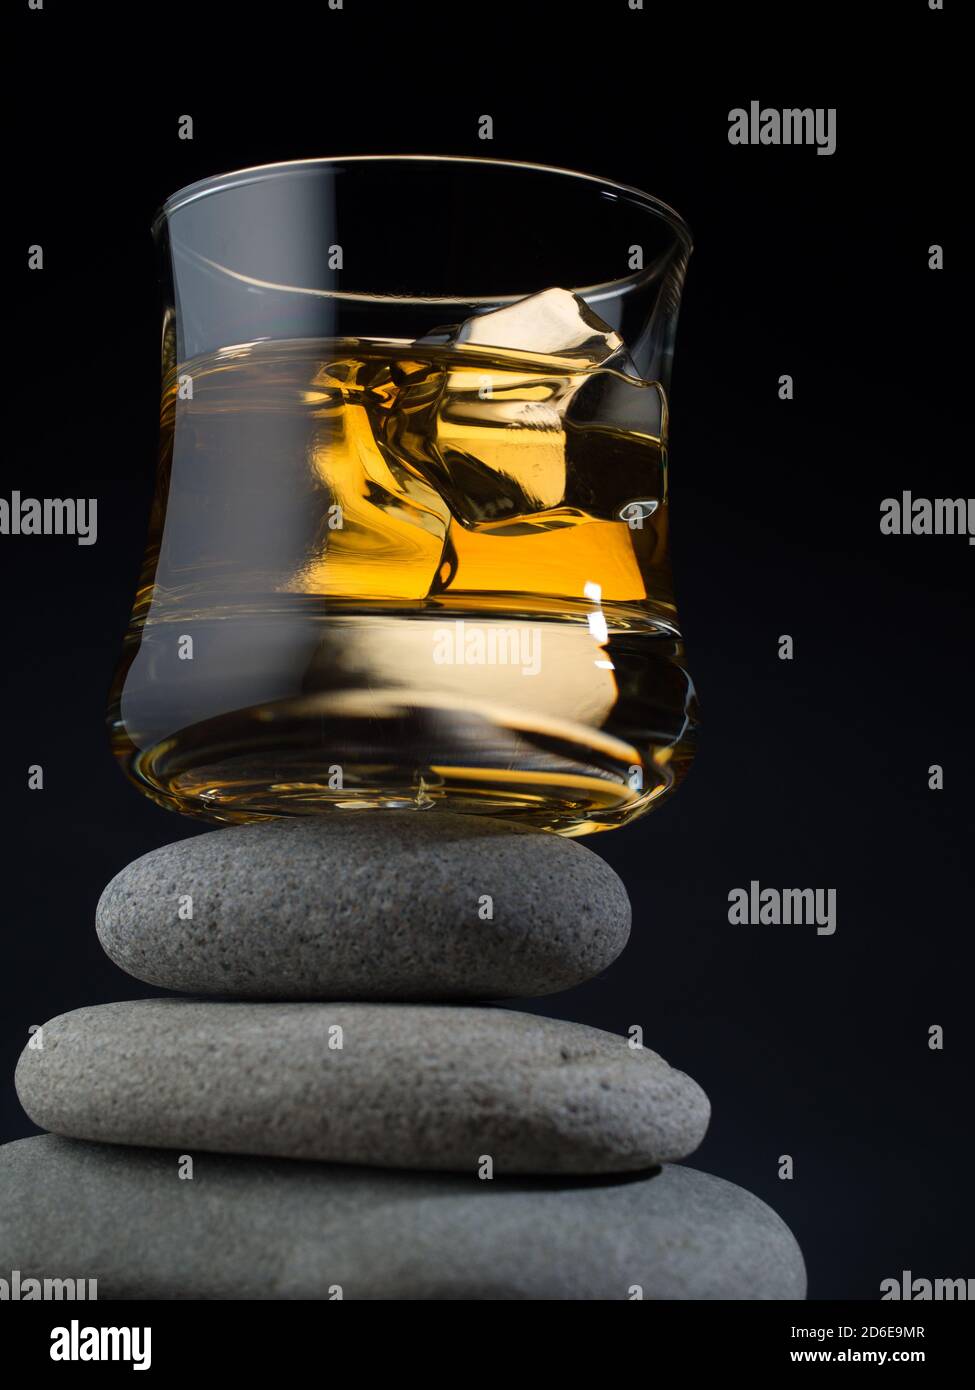 Whisky glass stones whiskey fotografías e imágenes de alta resolución -  Página 2 - Alamy